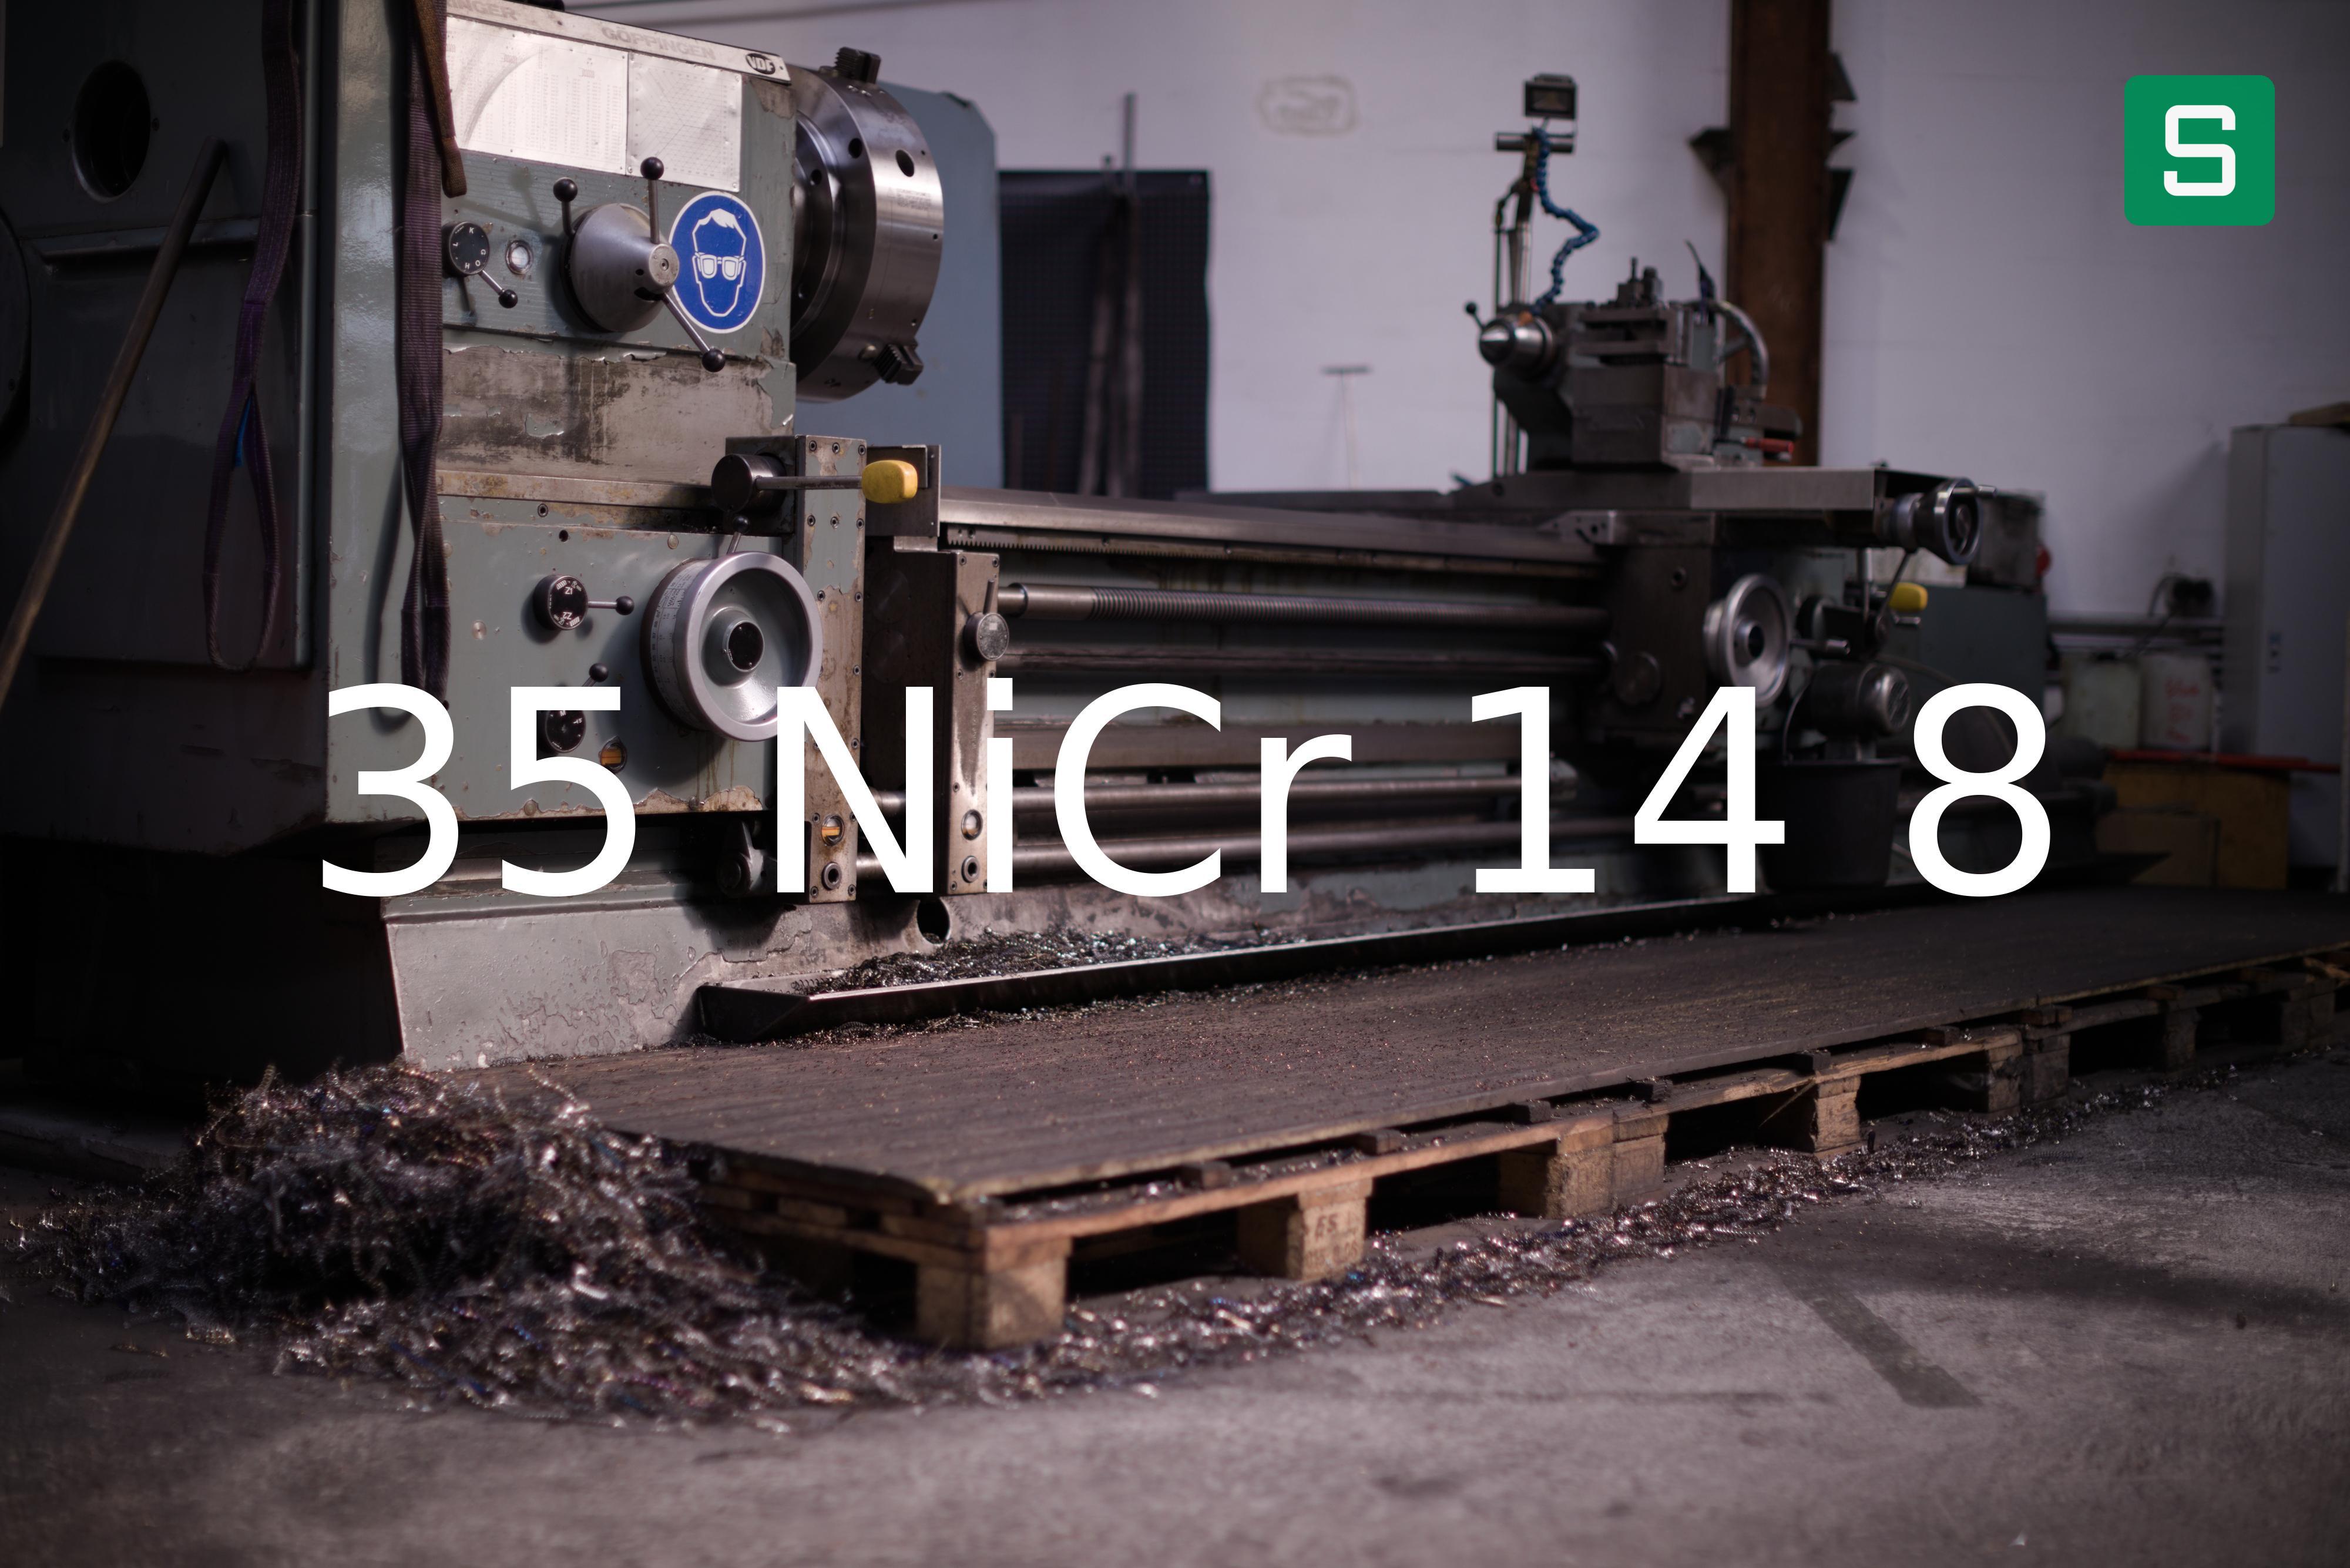 Steel Material: 35 NiCr 14 8